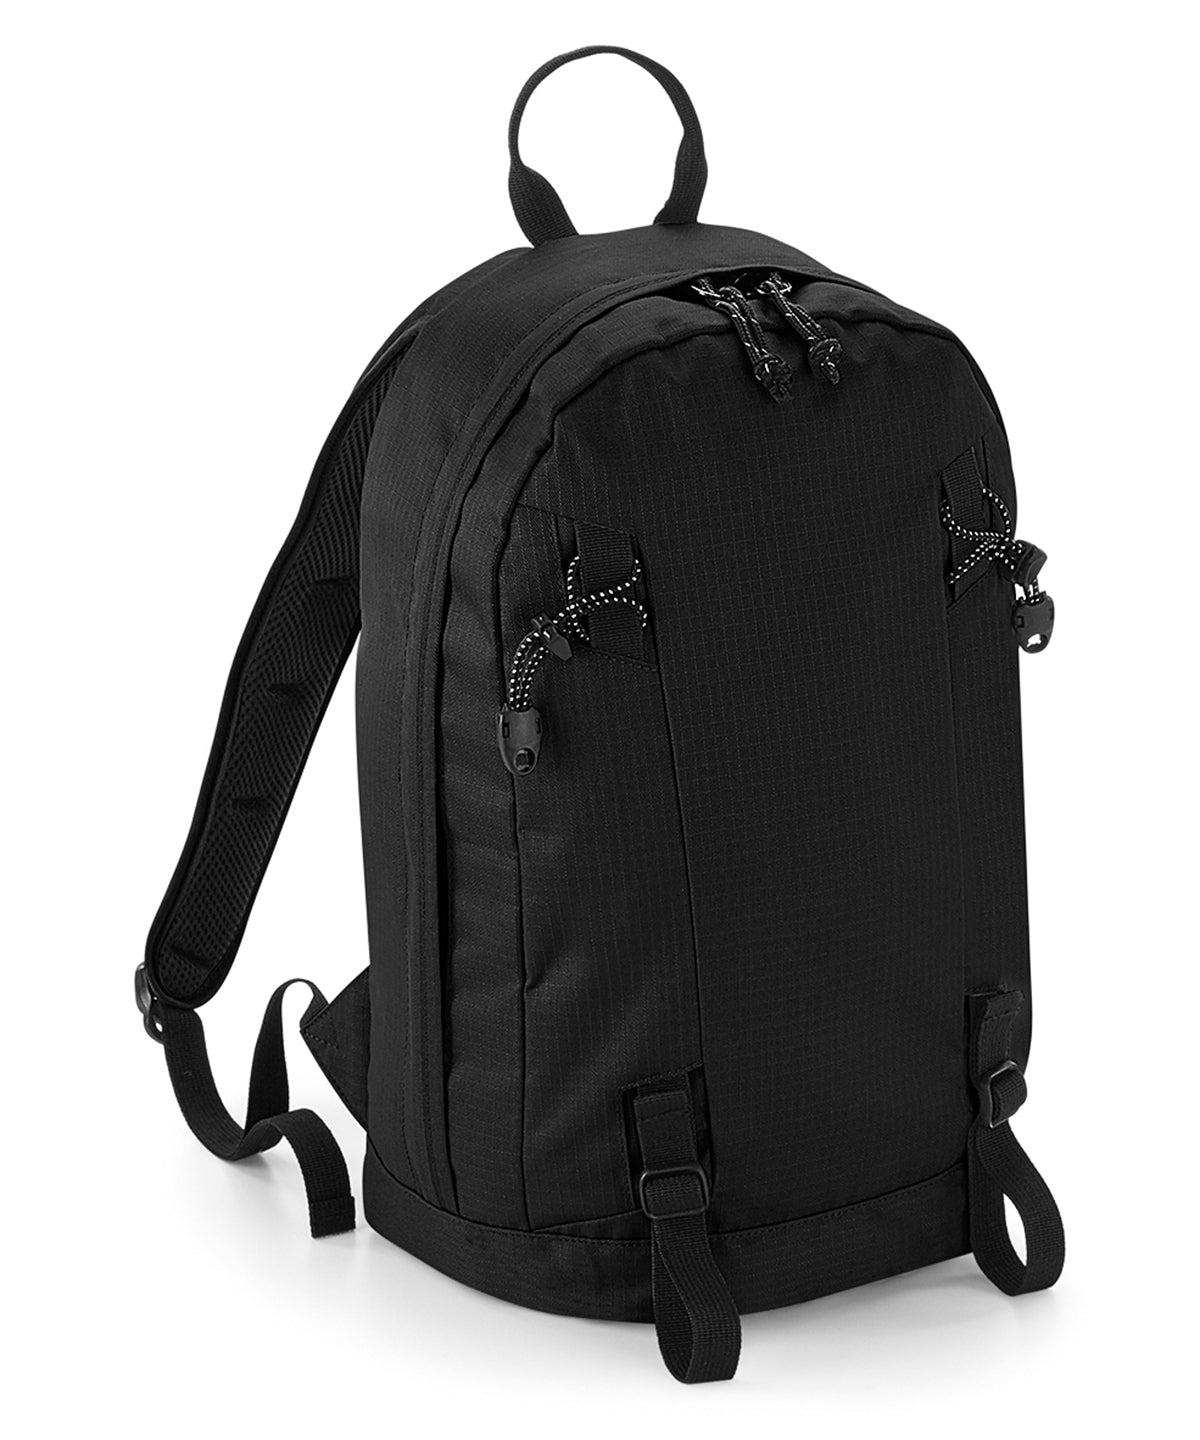 Töskur - Everyday Outdoor 15 Litre Backpack